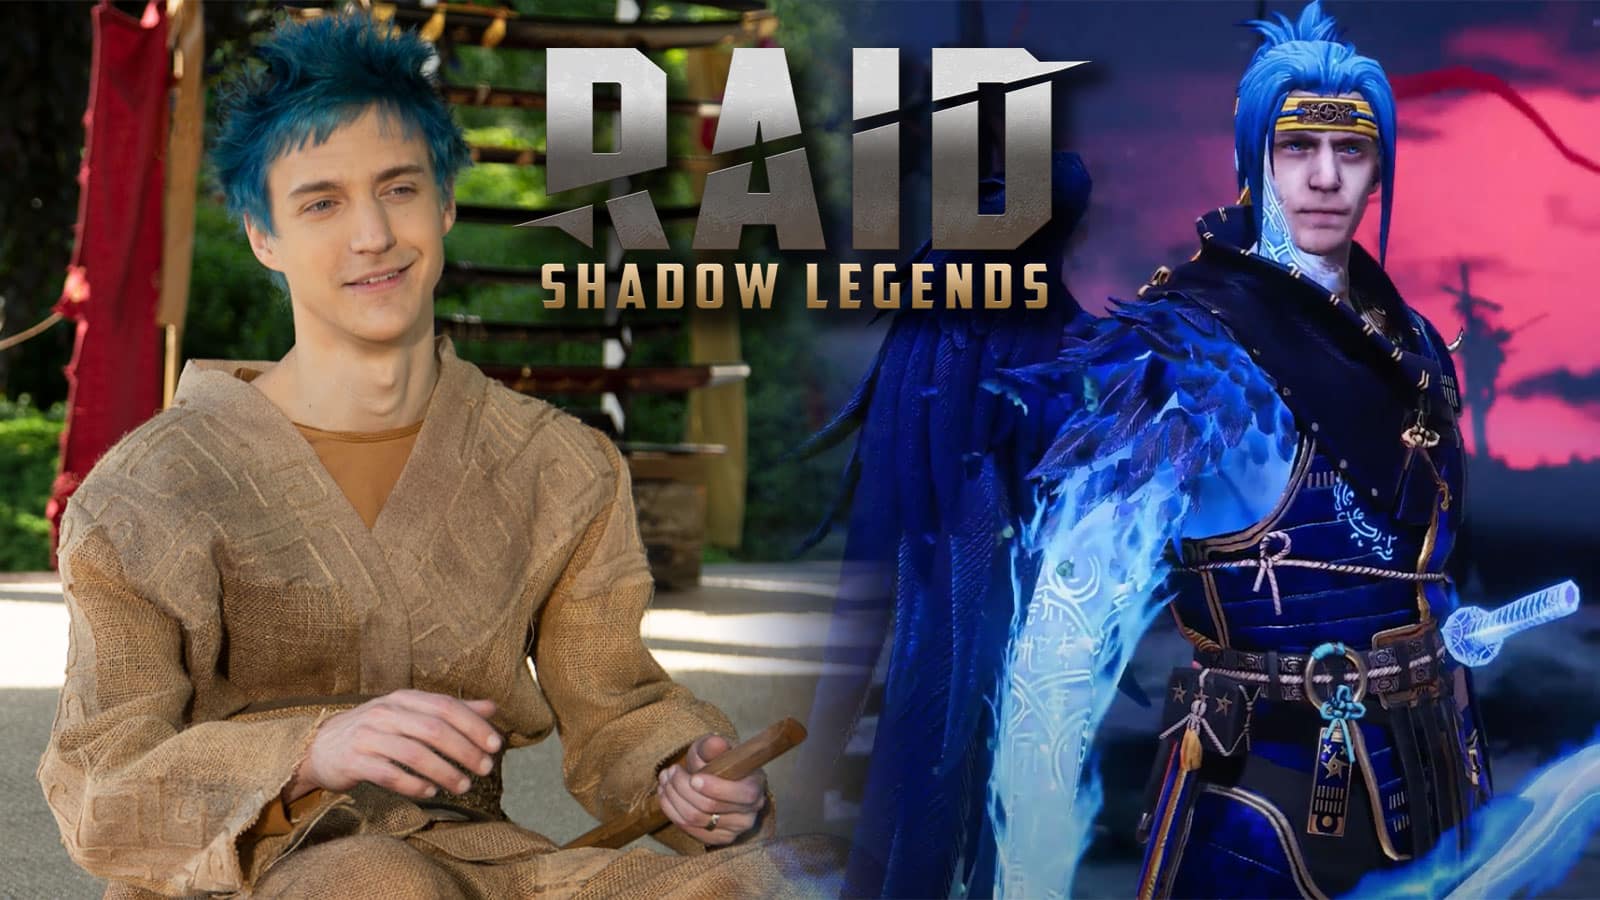 Hey, Raiders! The Ninja Hunt event - Raid: Shadow Legends